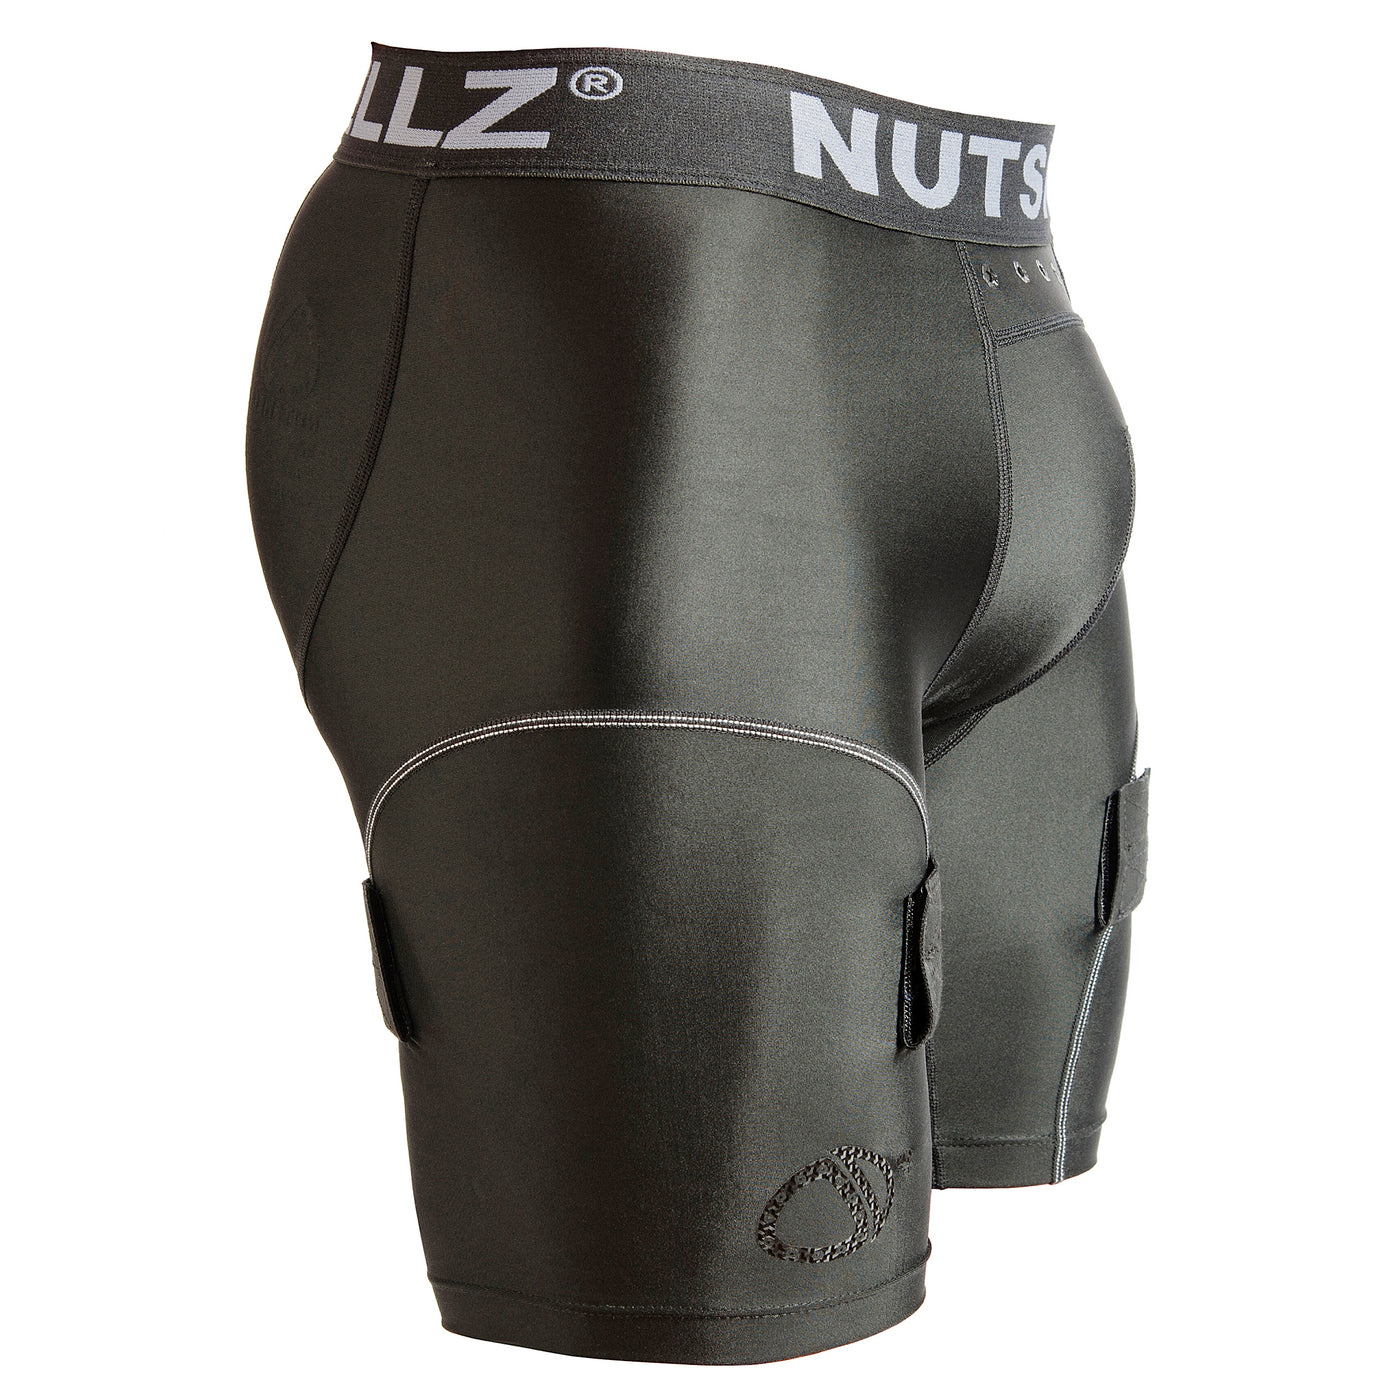 Nutshellz®/Black/Adult/Hockey Jock Short - With Velcro